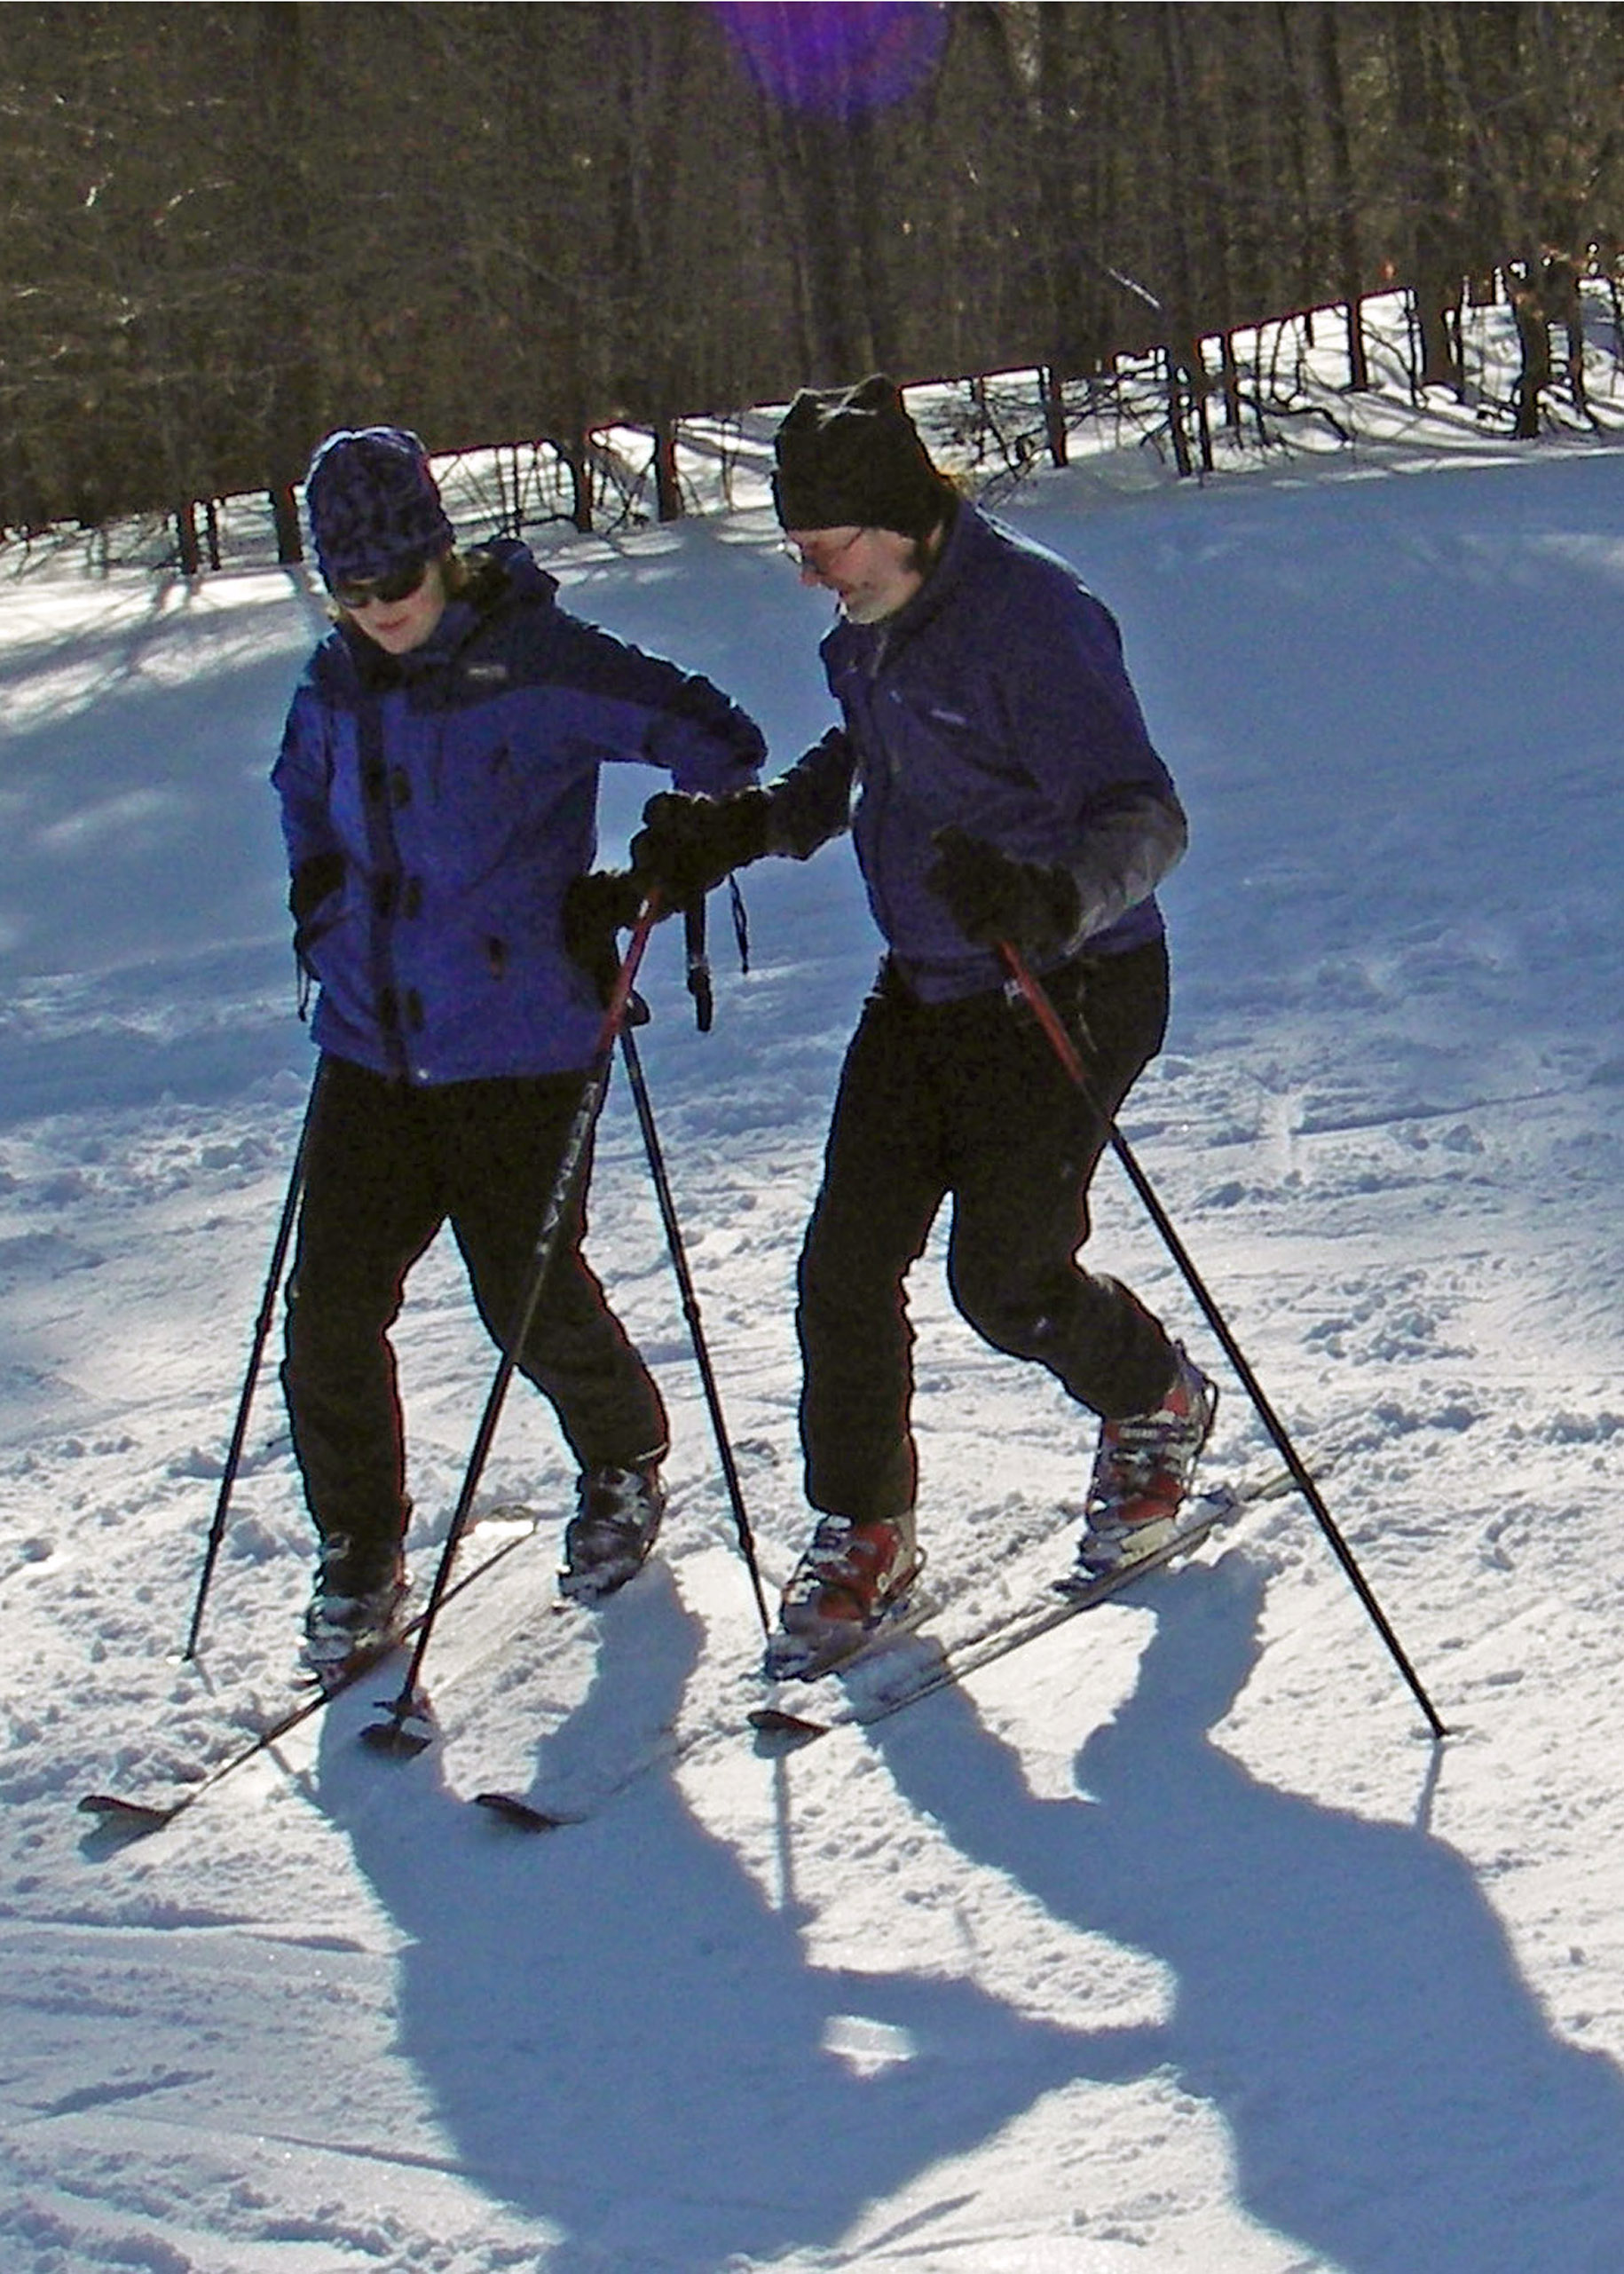 Amc Winter Workshop Outdoors Skiing Snowshoeing regarding Ski Technique And Skills